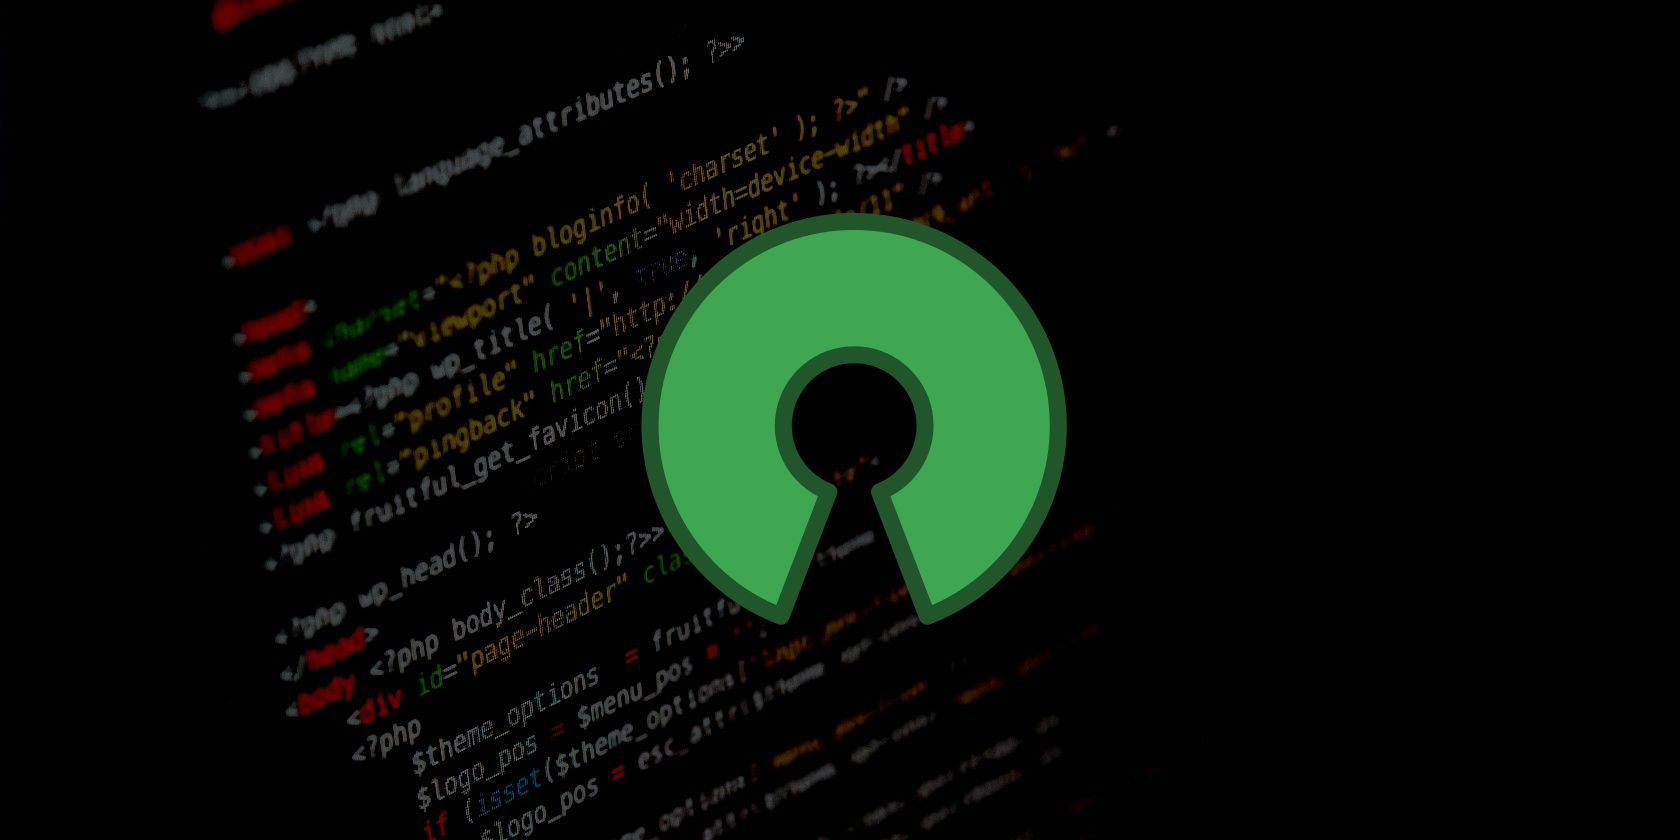 Open Source Initiative logo against code